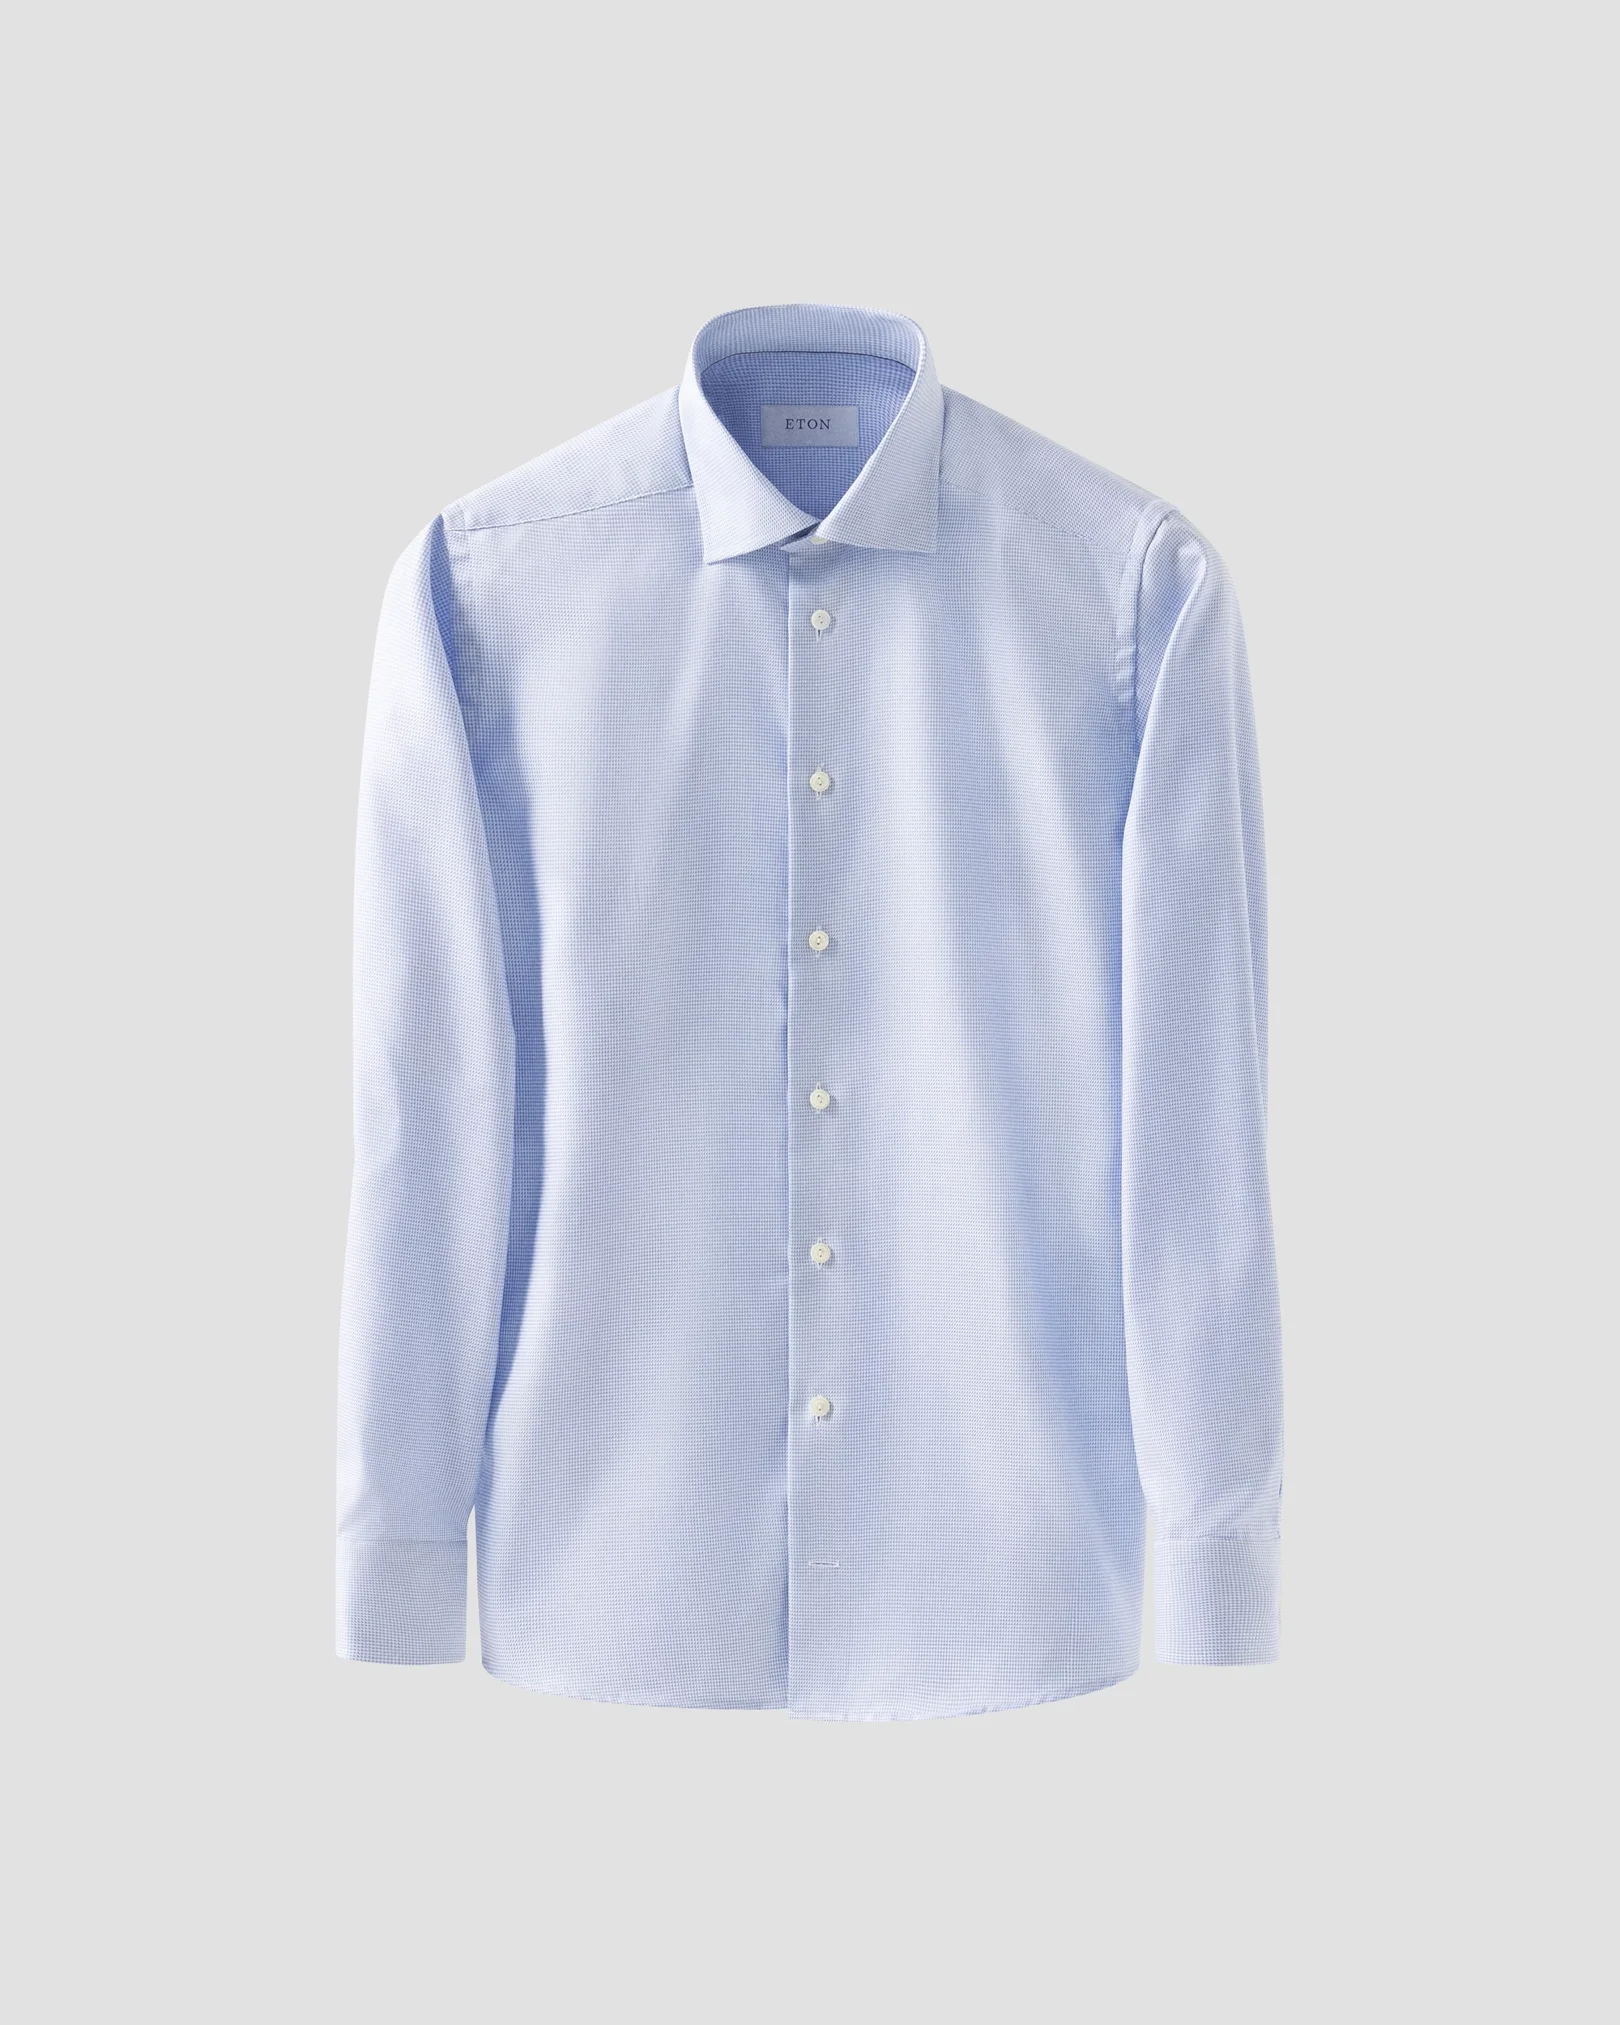 Eton - Light Blue Patterned Textured Twill Shirt